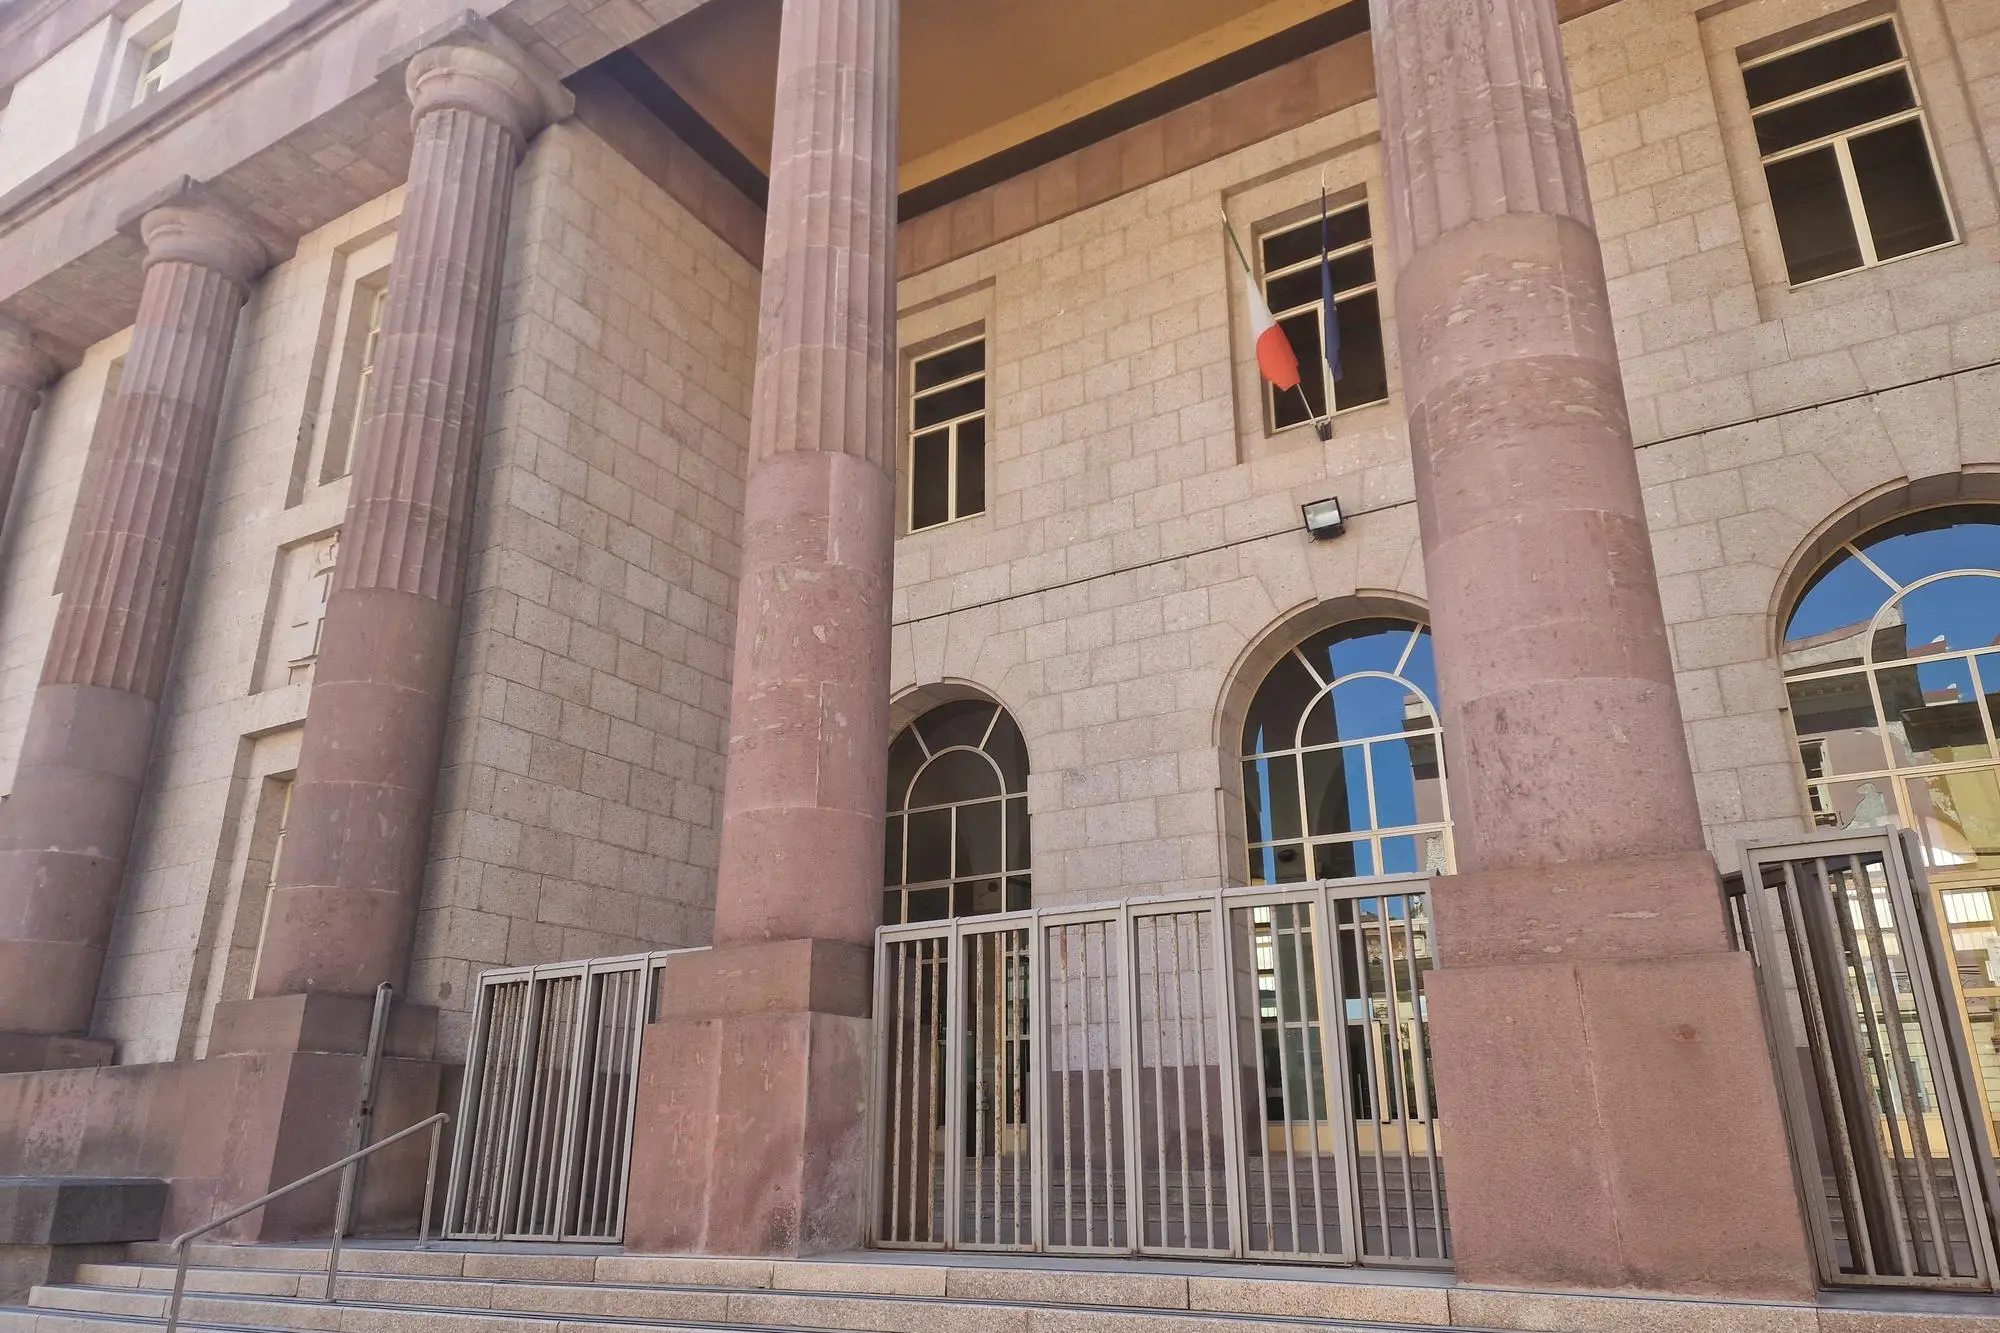 Il tribunale di Sassari (foto Floris)